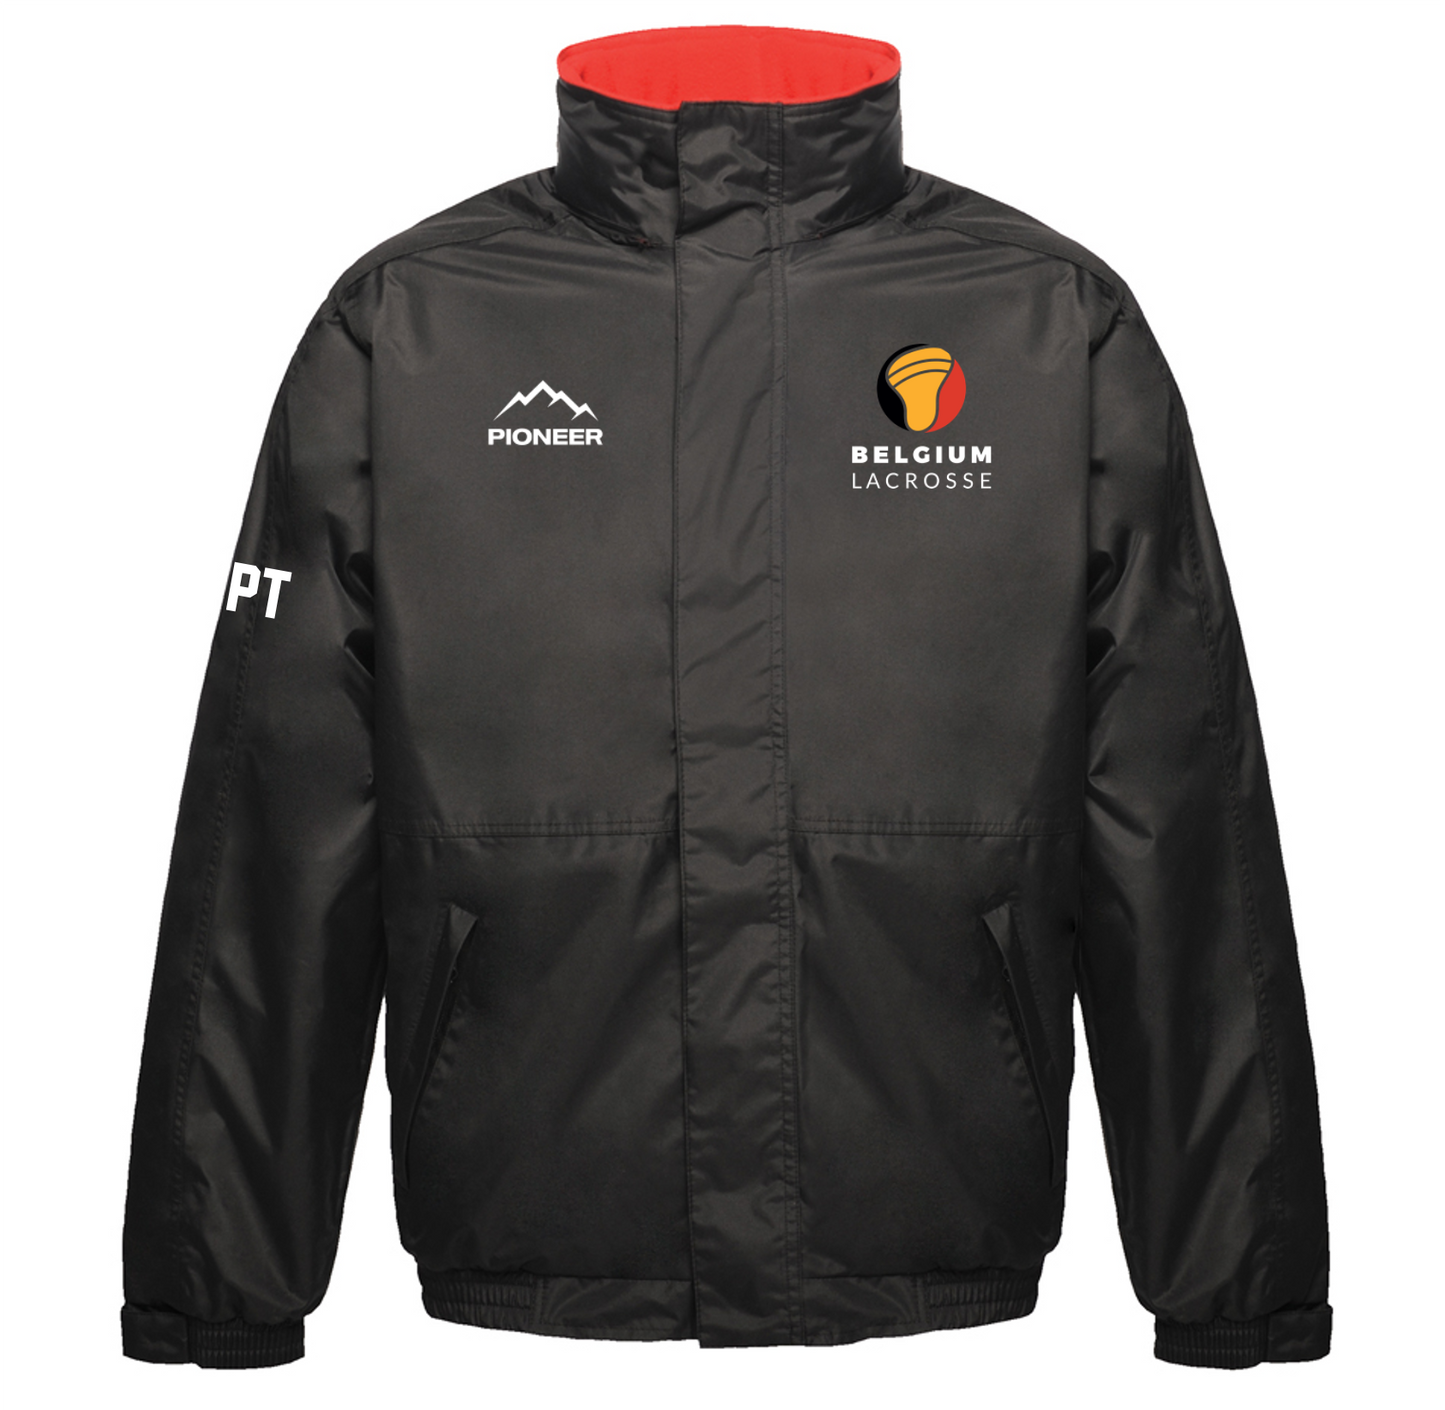 Belgium Lacrosse Waterproof Insulated Jacket